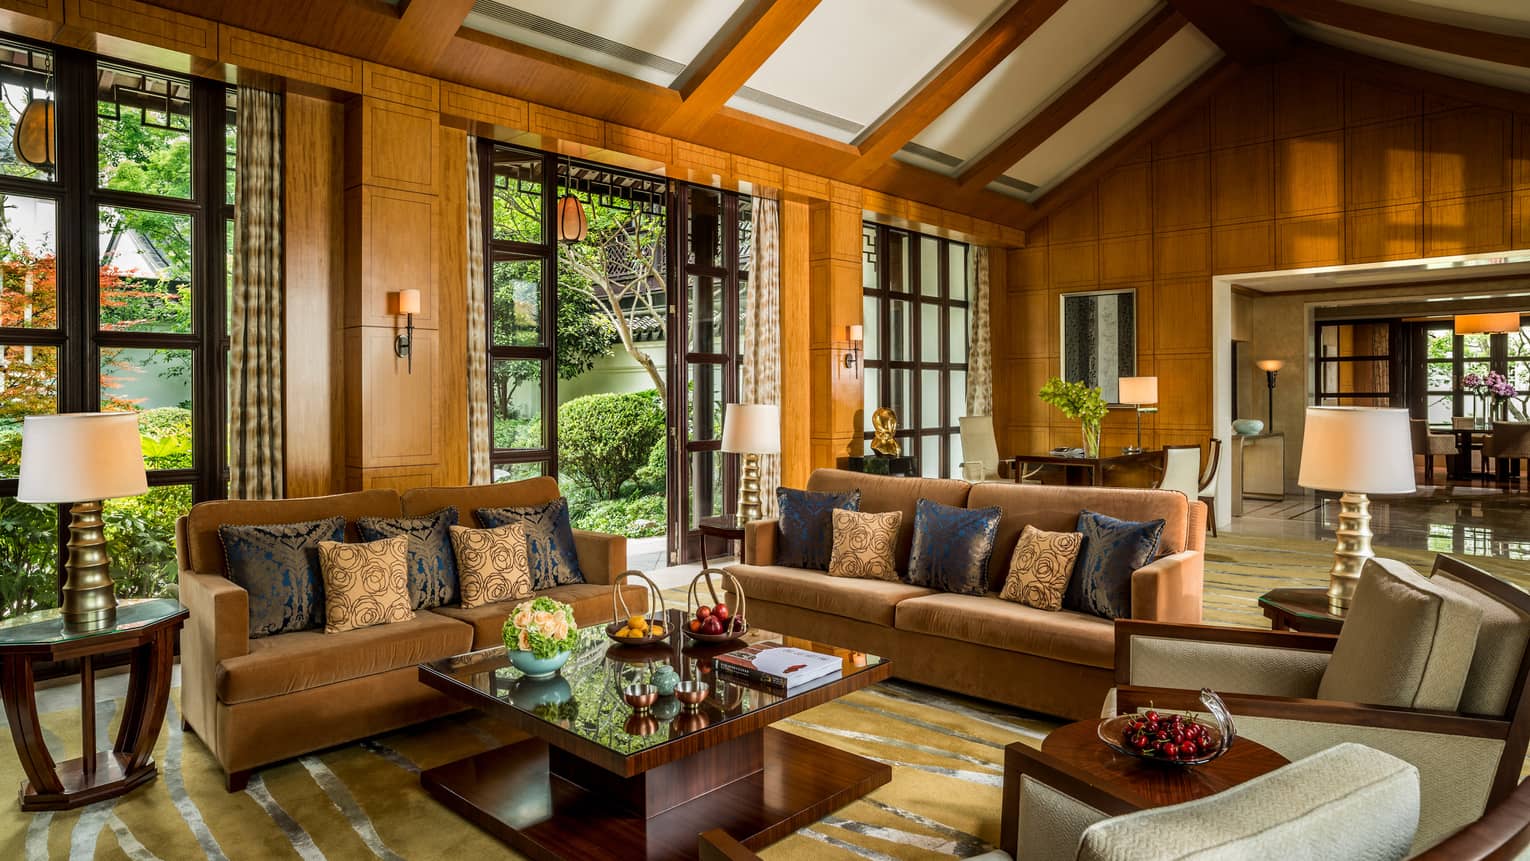 Presidential Villa with two orange velvet sofas, chairs around modern wood table